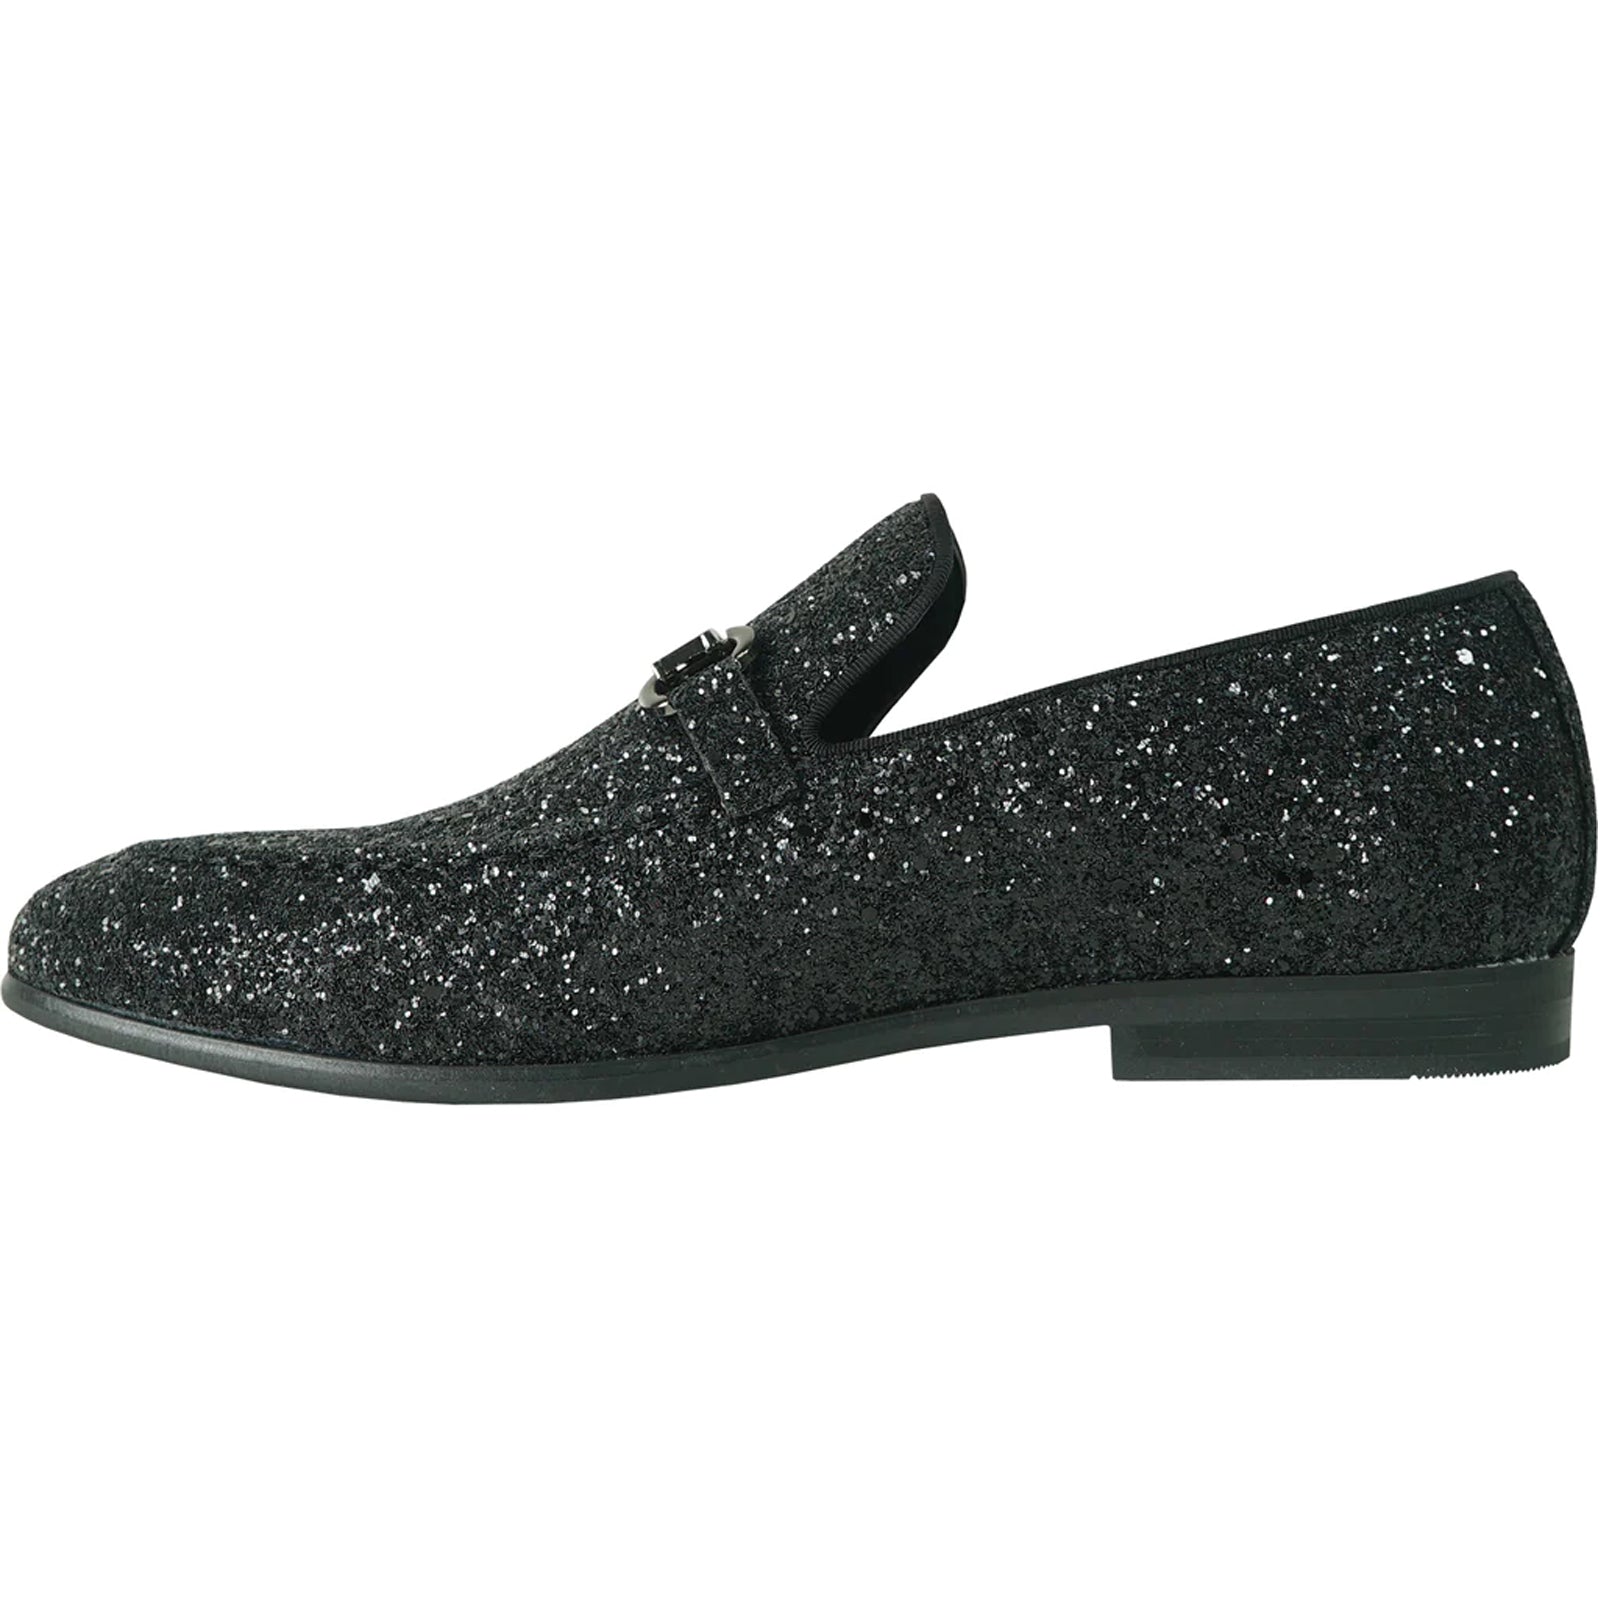 "Black Sequin Prom Tuxedo Loafers - Modern Men's Glitter Buckle Shoes"